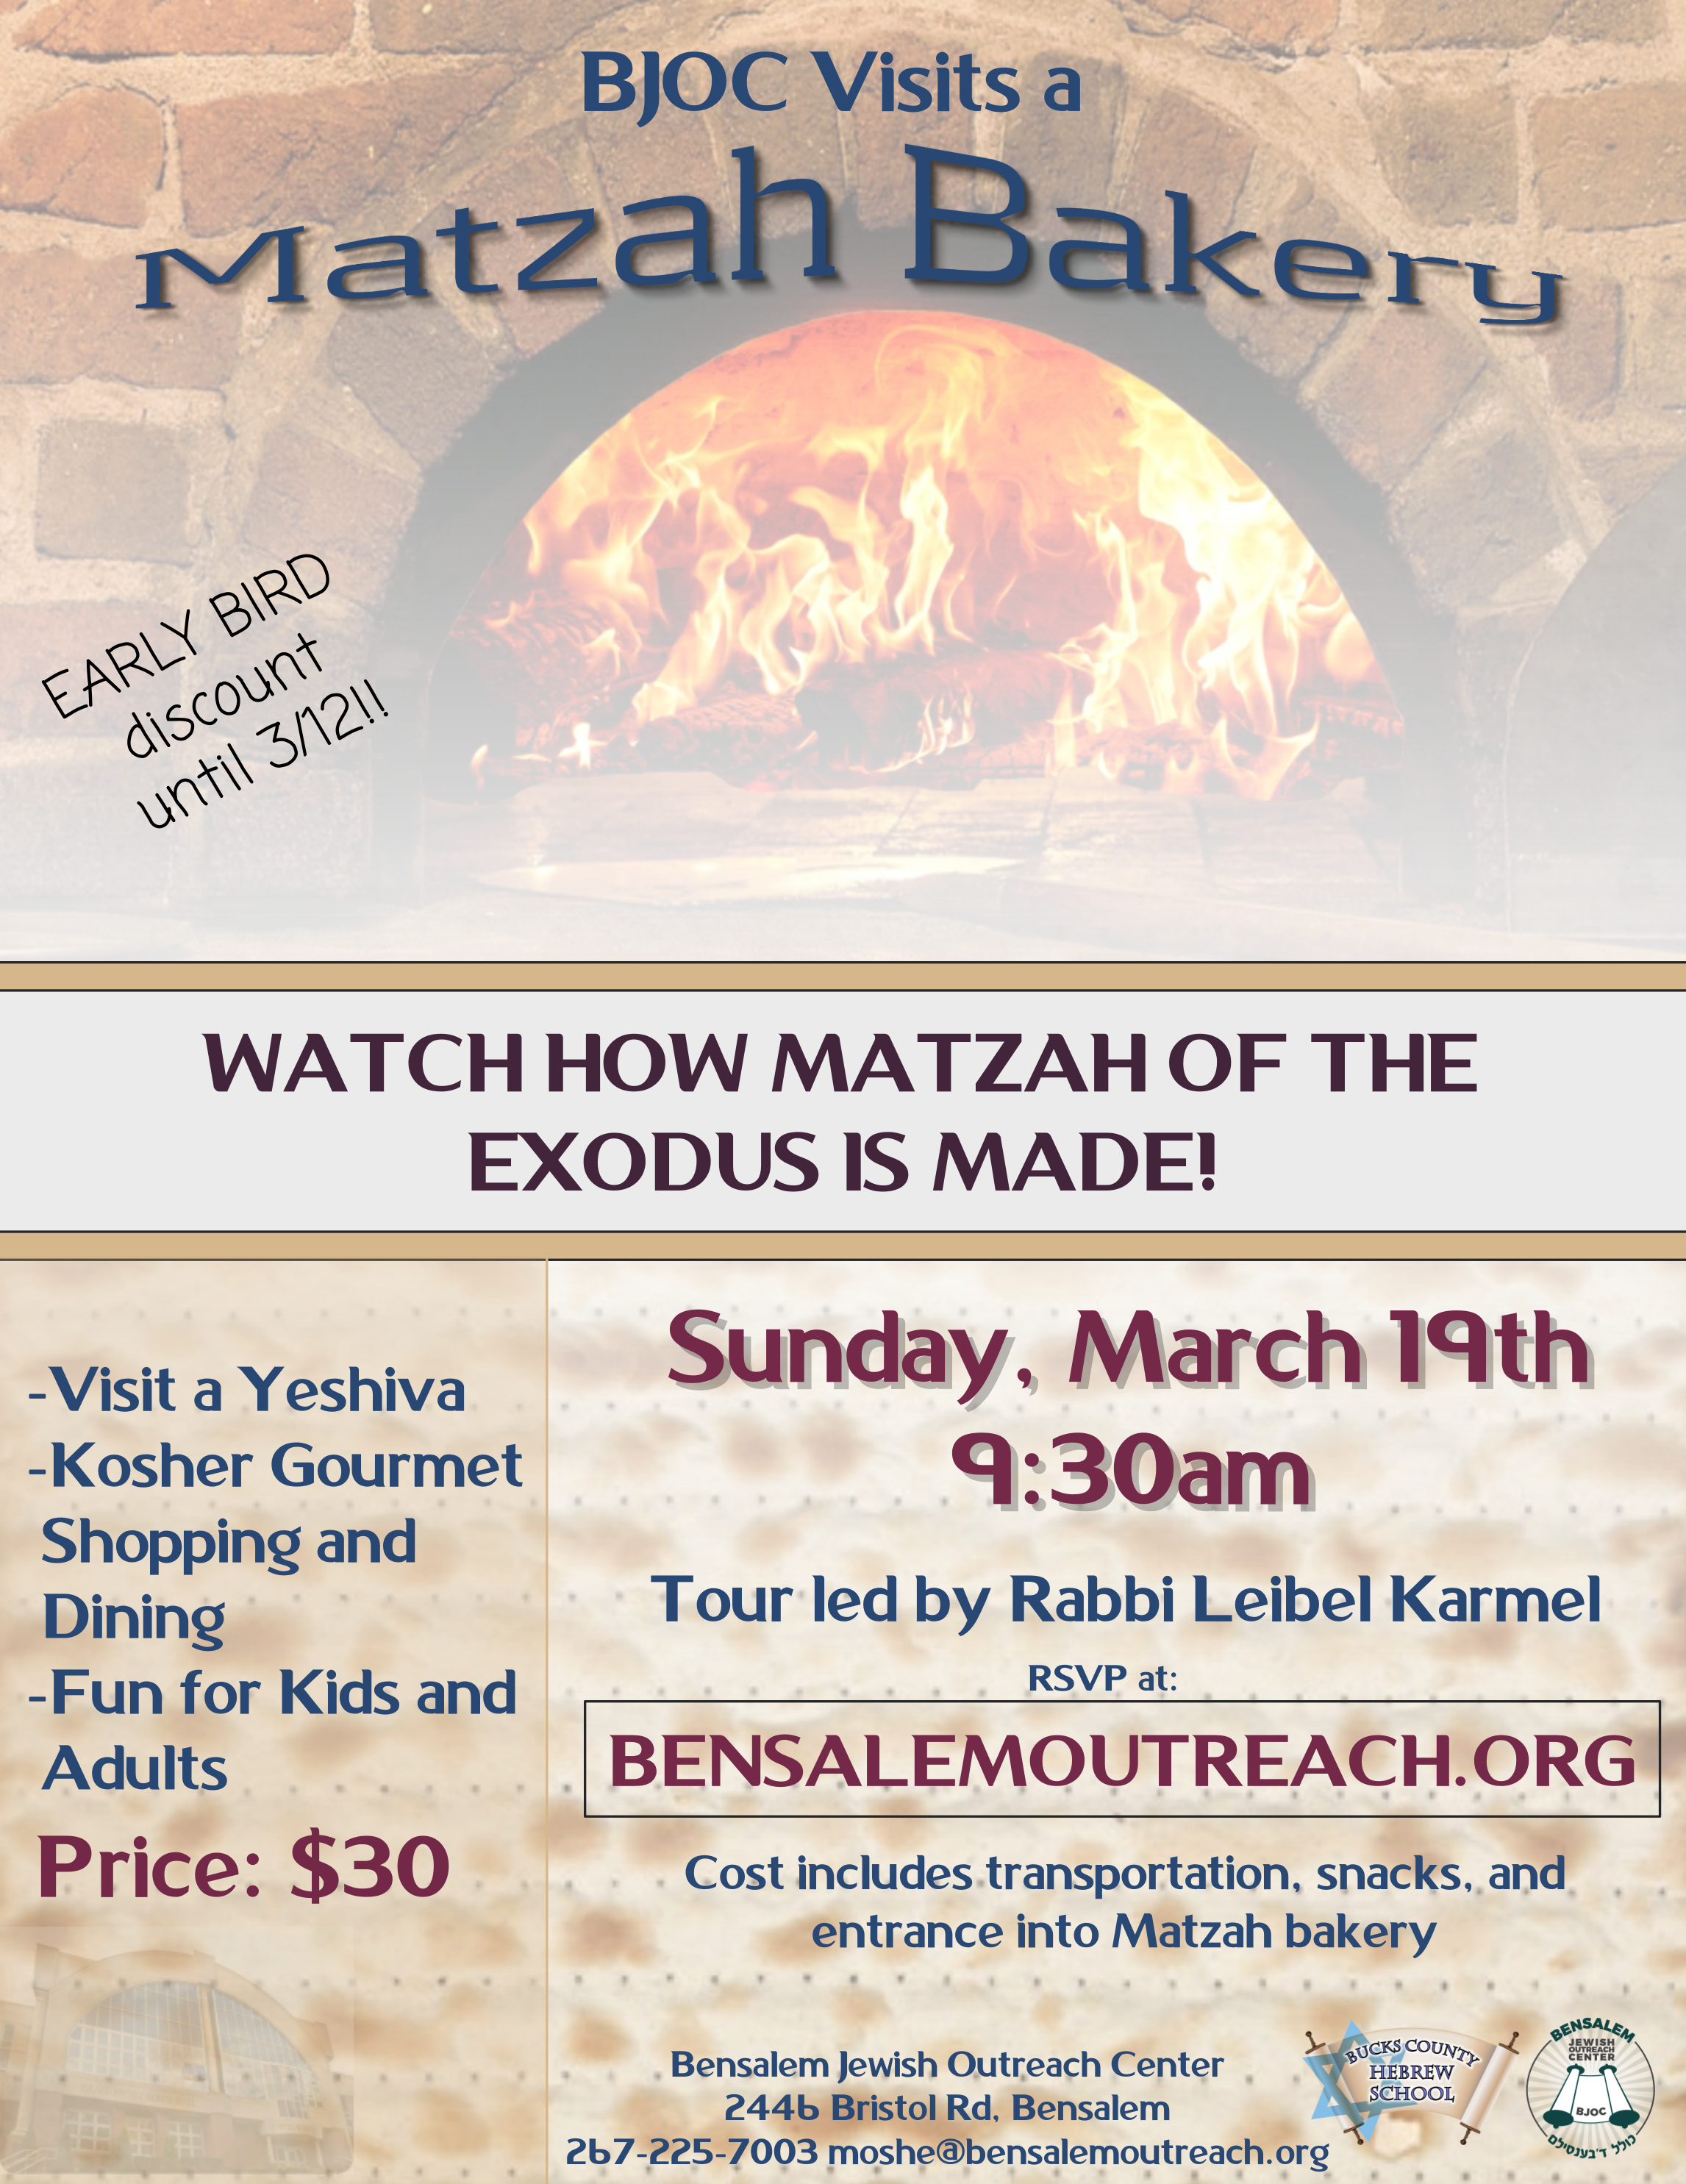 BJOC Visits a Matzah Bakery